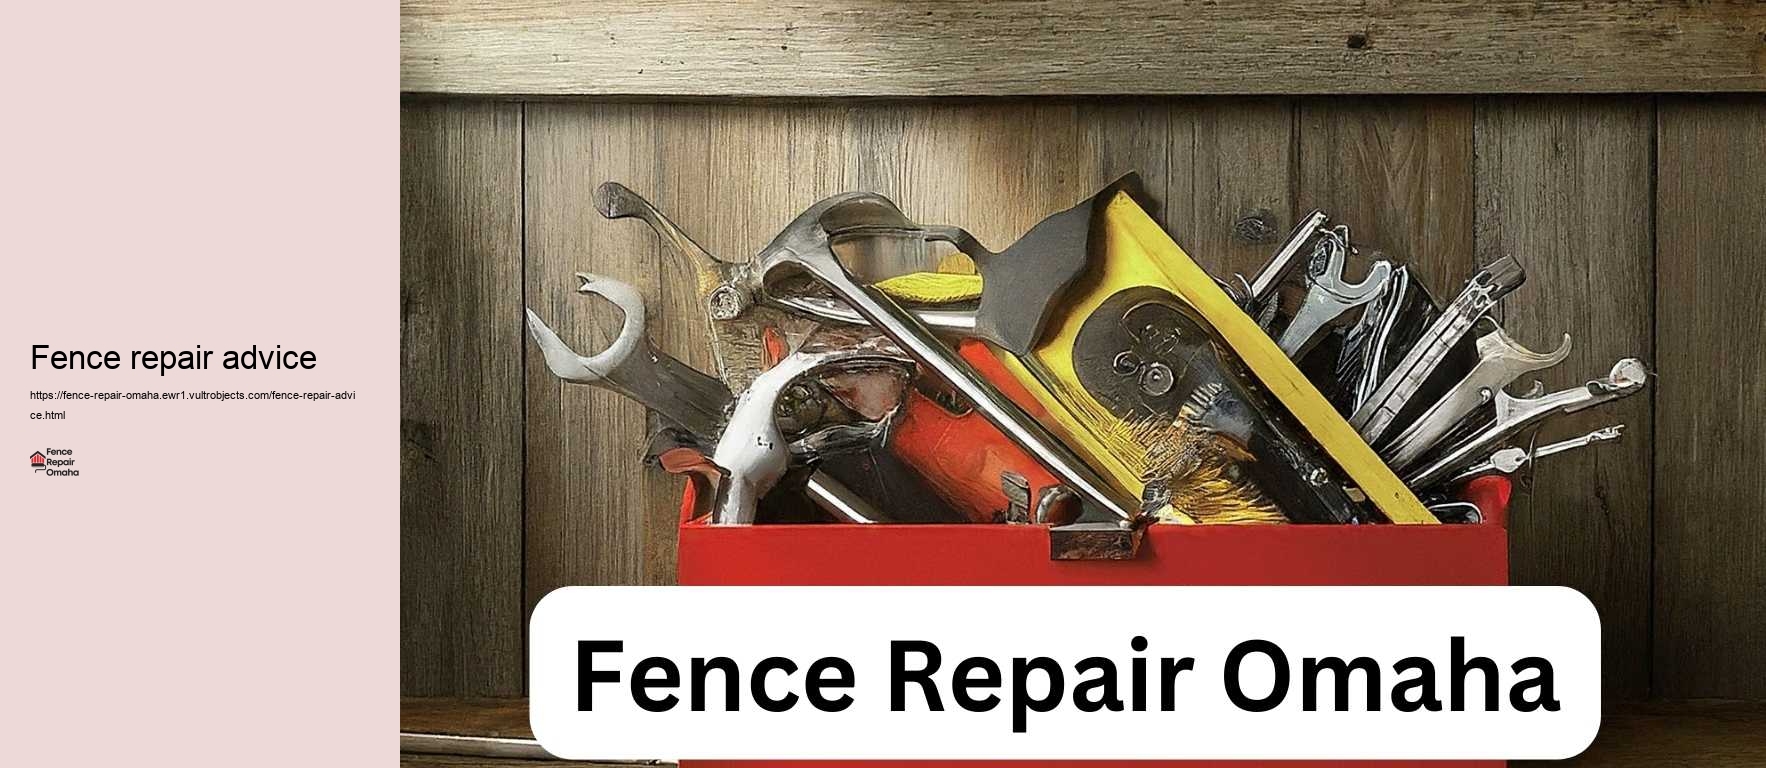 Fence repair advice